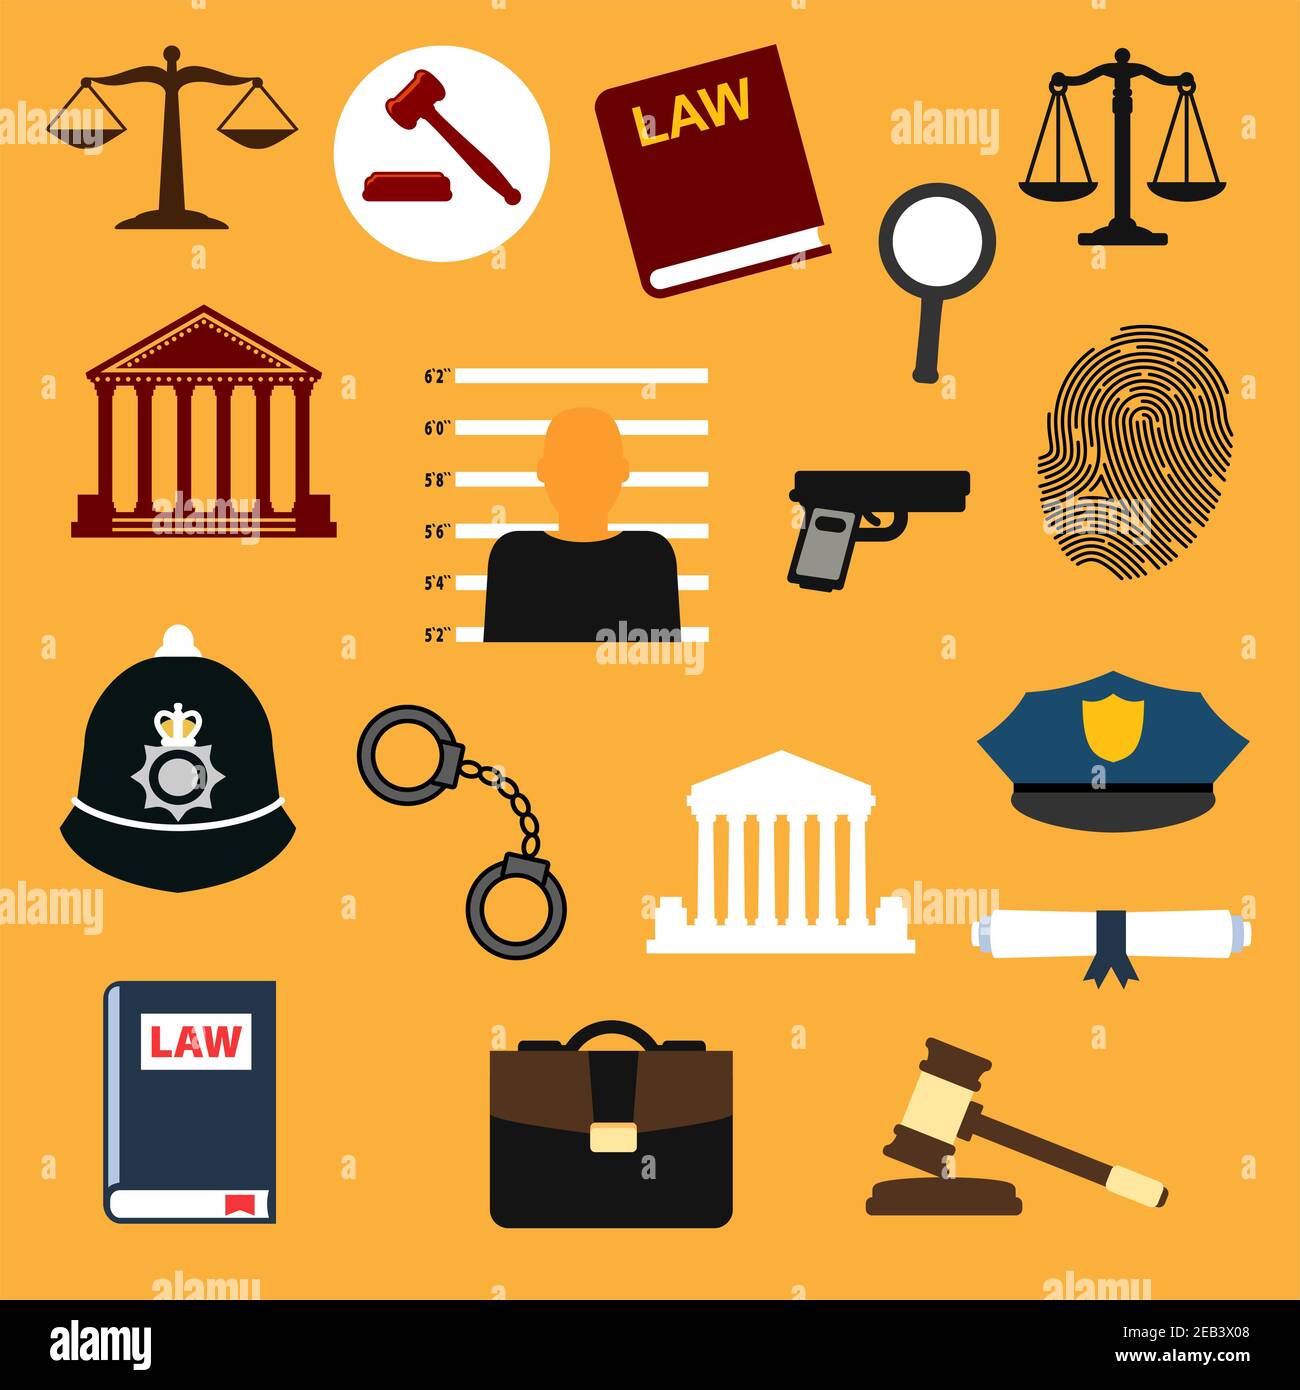 Law, justice and police flat icons set. Lawbook, prisoner photo, handcuff, gun, fingerprint, policeman peaked caps, court building, magnifier, gavel, Stock Vector